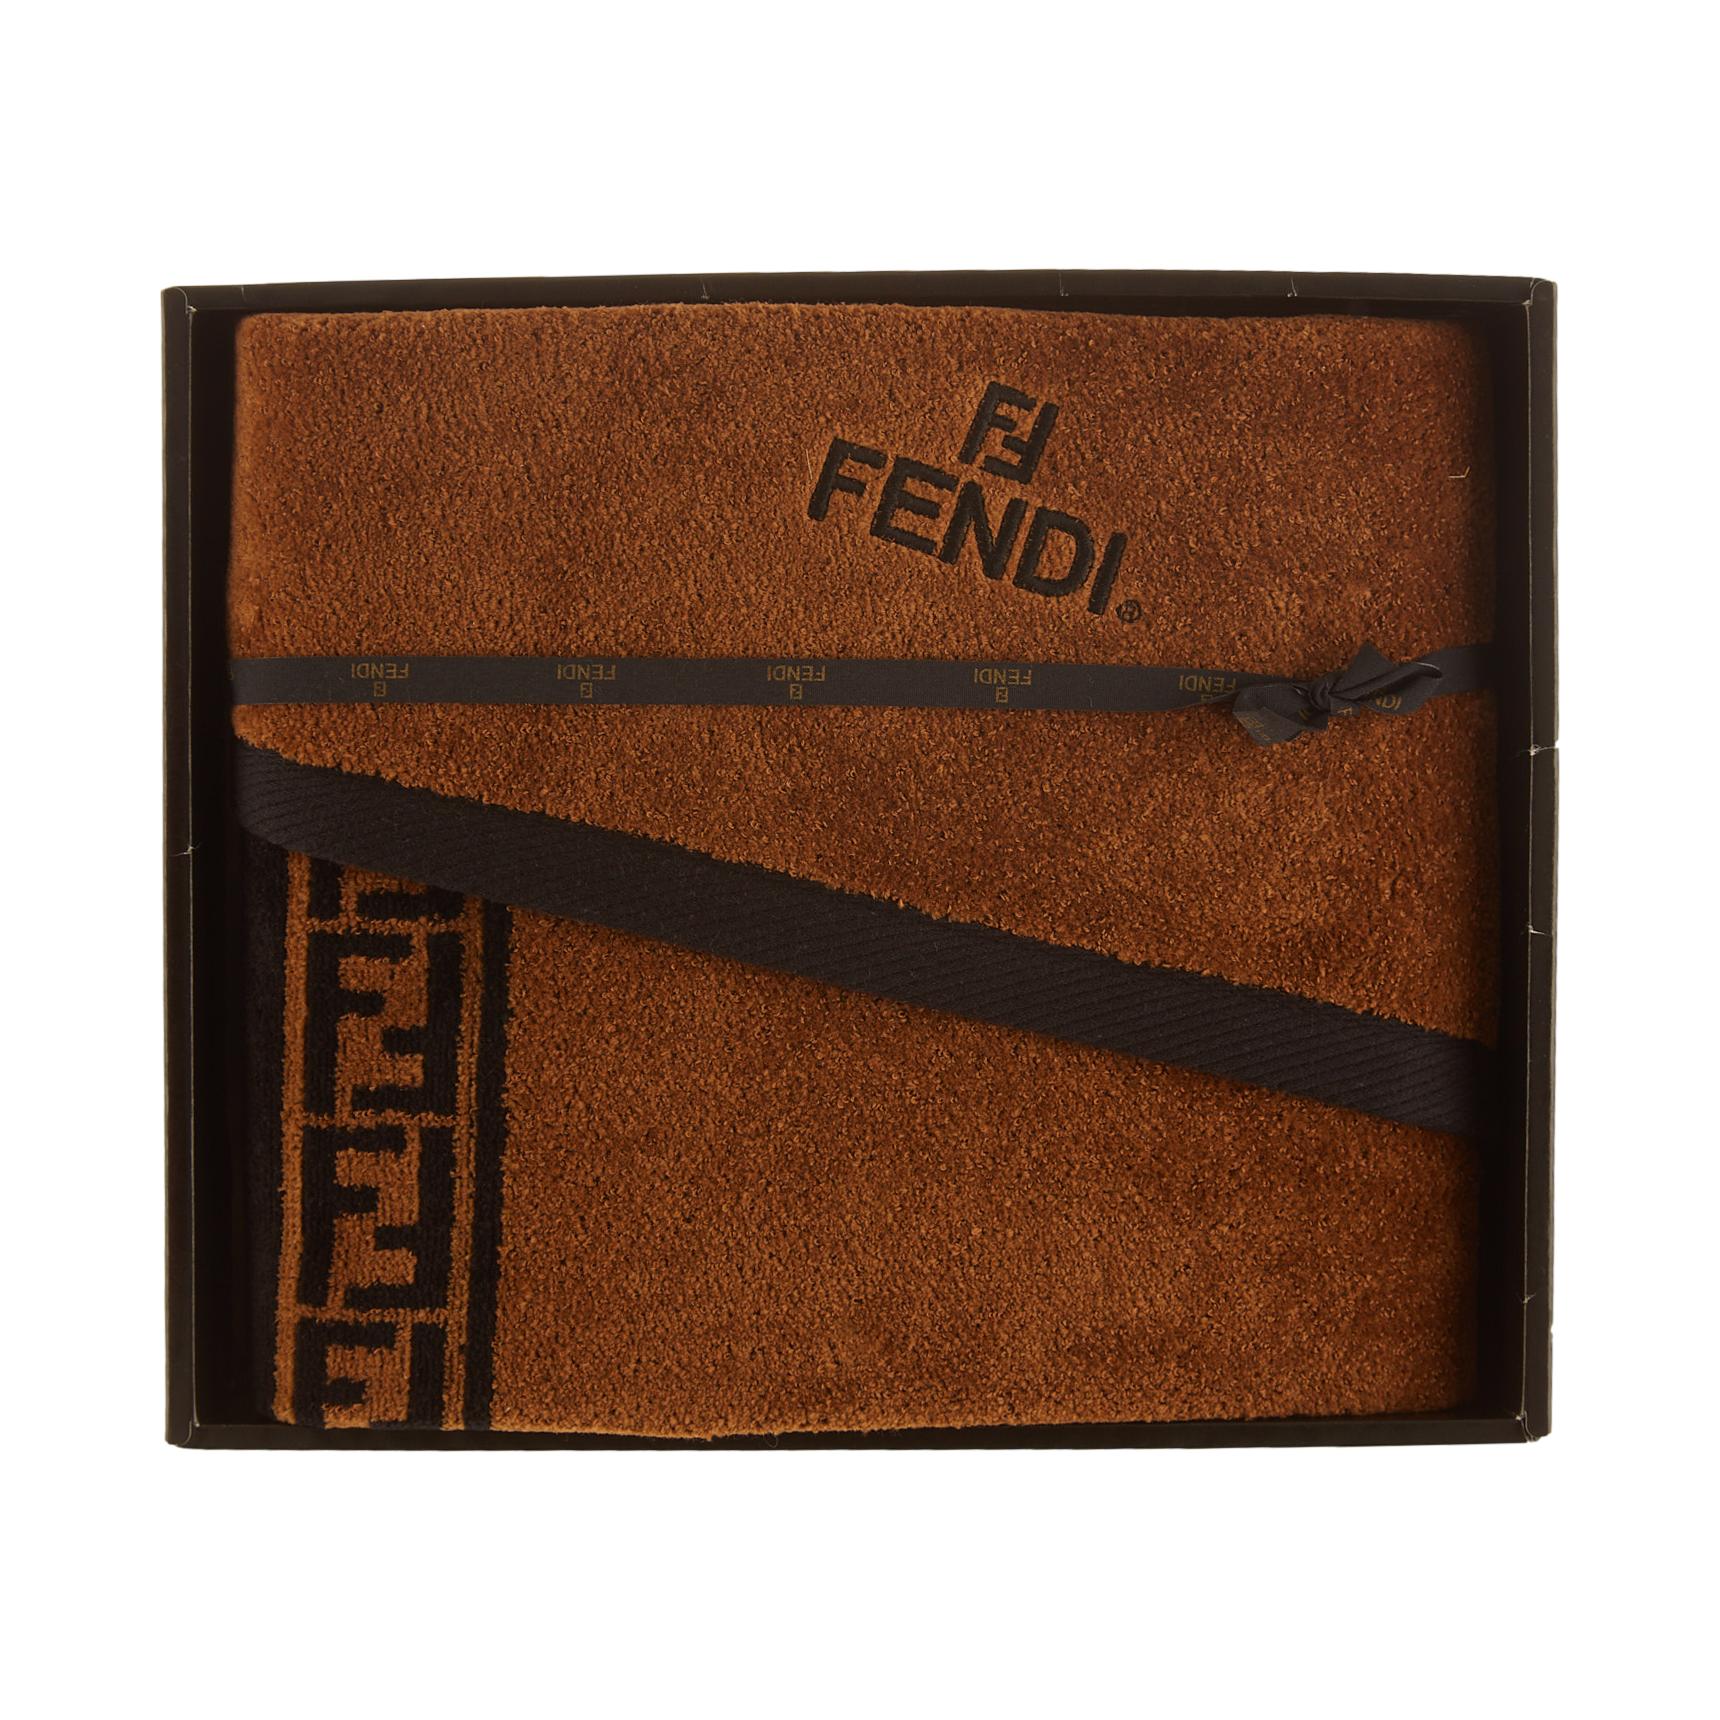 Logo Leather Cardholder in Brown - Fendi